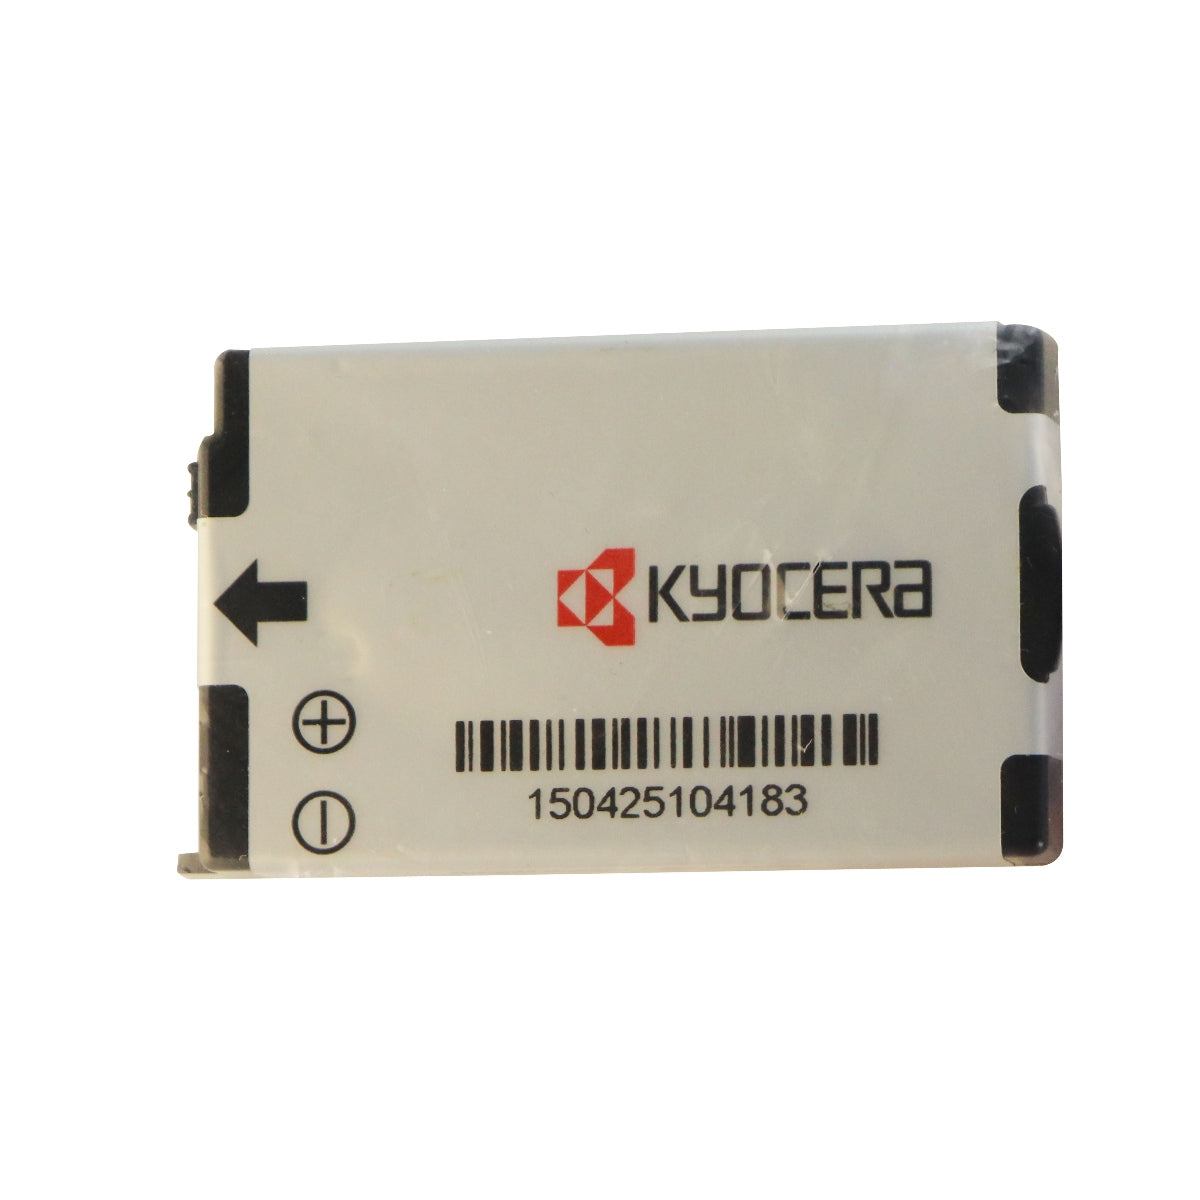 OEM Kyocera TXBAT10009 900 mAh Replacement Battery for Kyocera Phantom - Kyocera - Simple Cell Shop, Free shipping from Maryland!